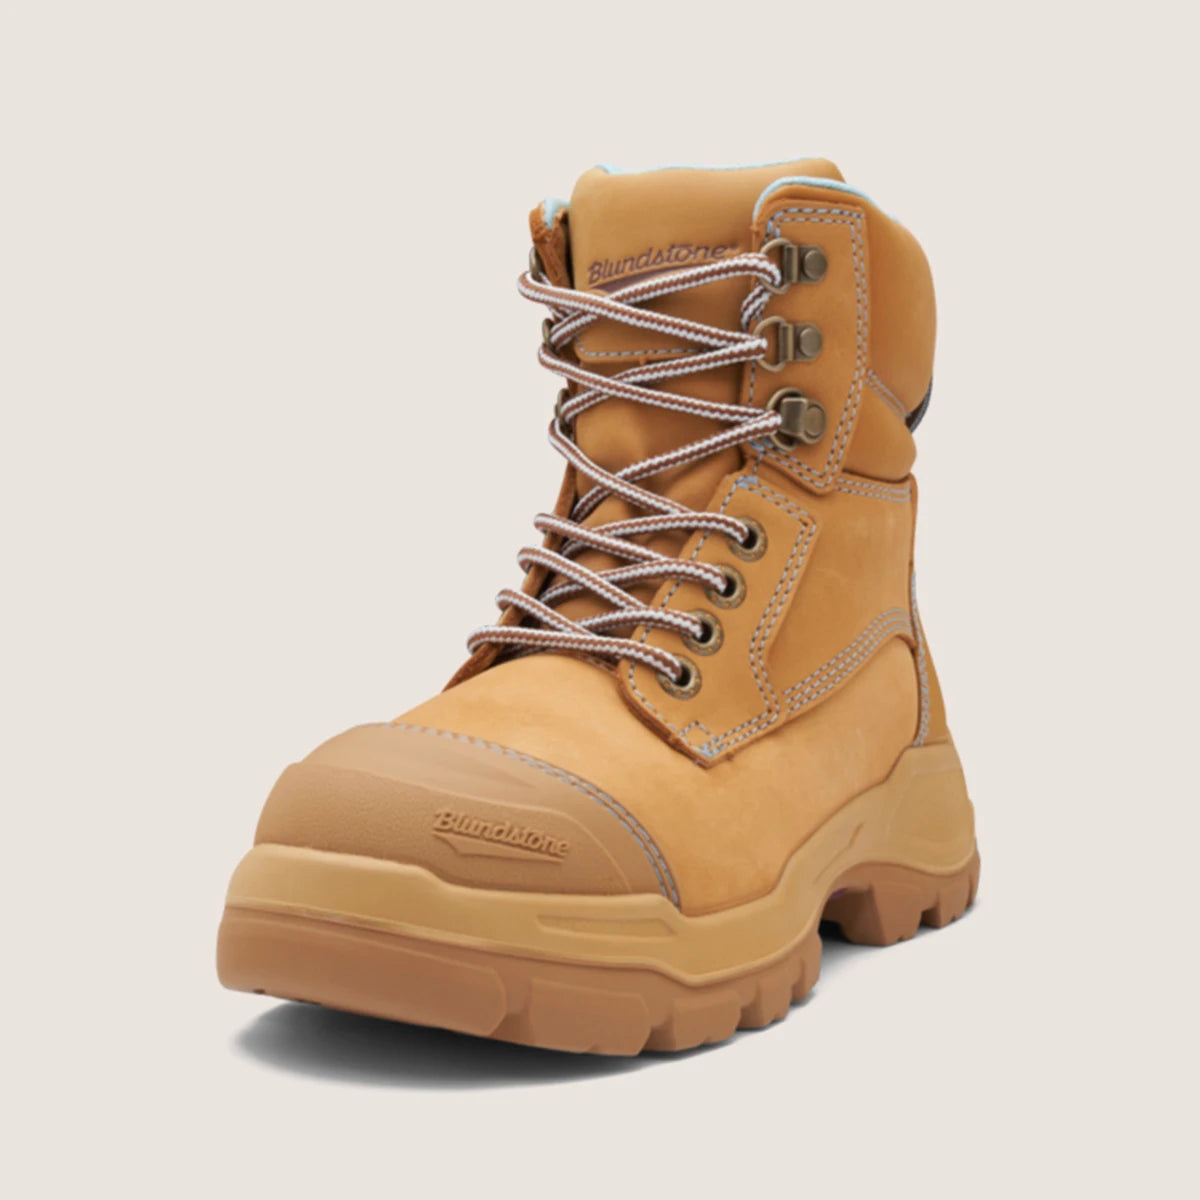 Blundstone 9960 Women's RotoFlex Safety Boots - Wheat